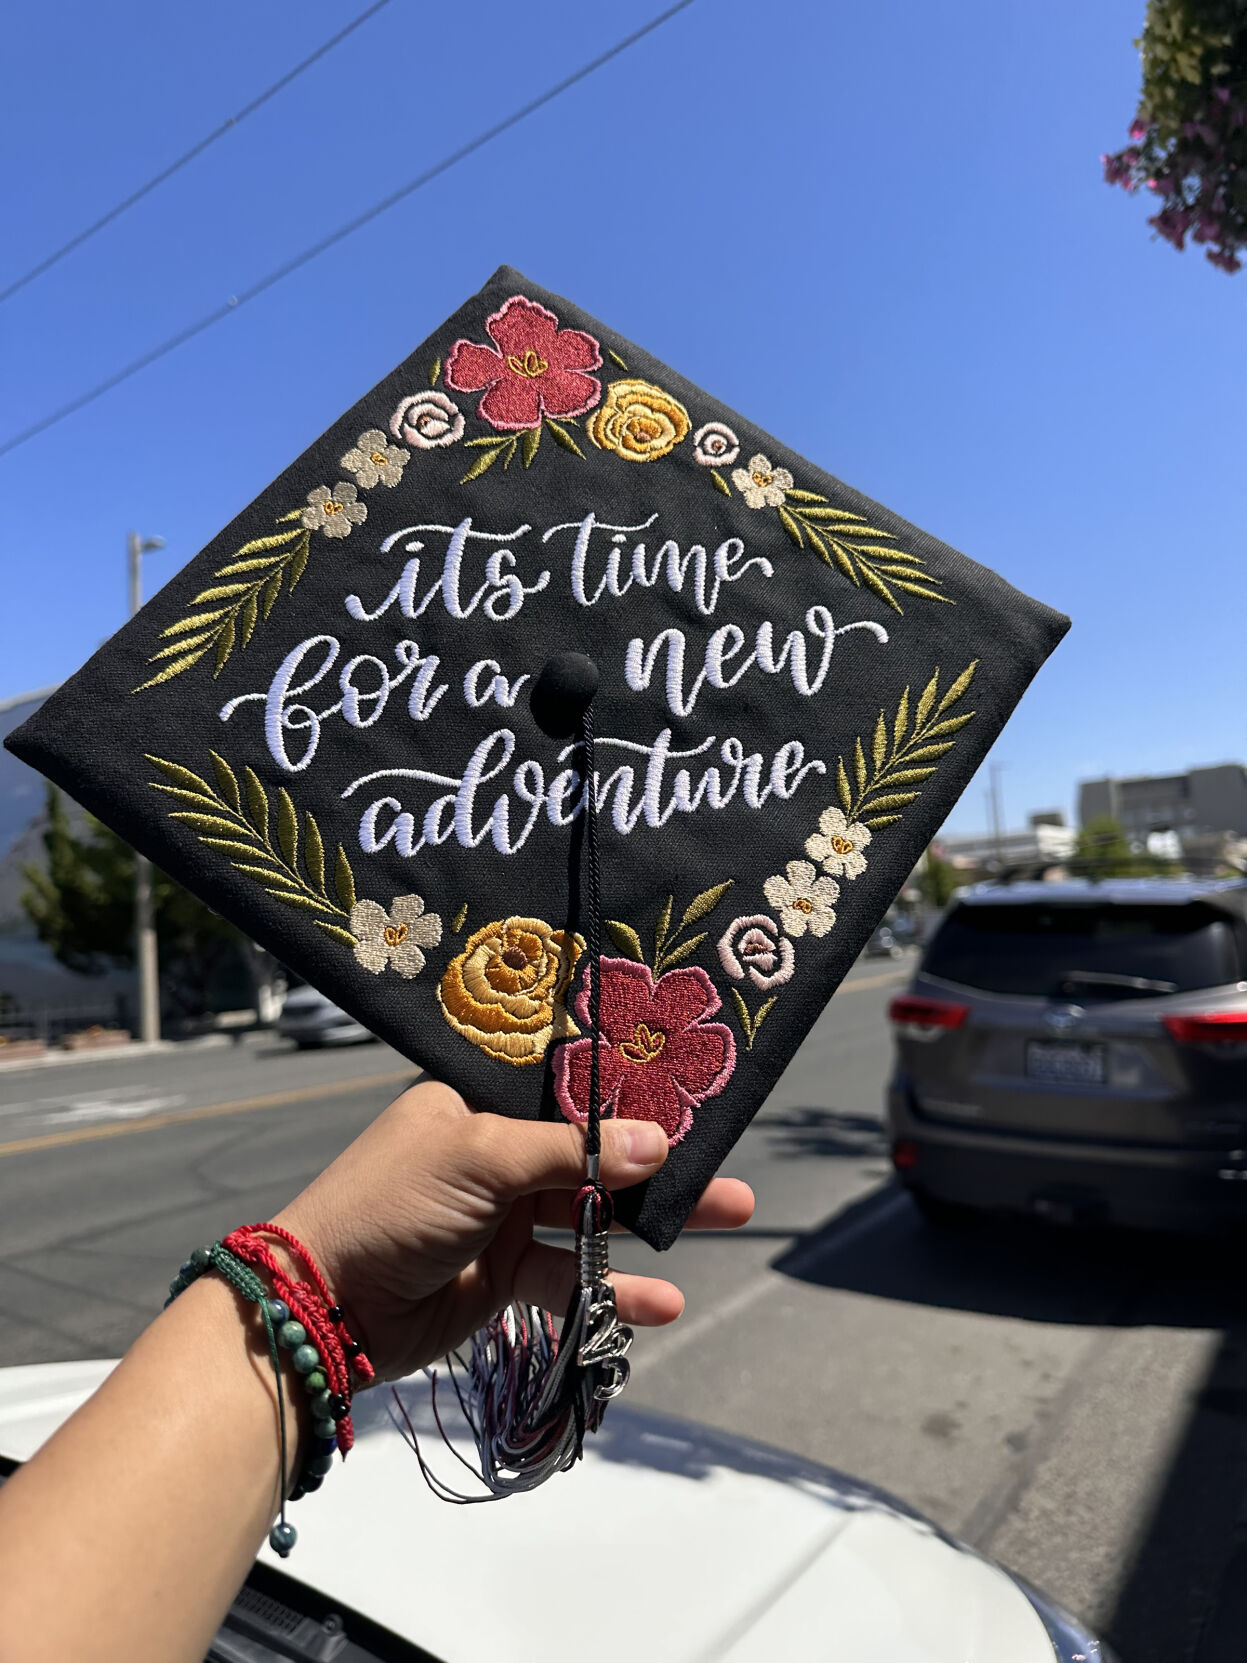 Photos: WCSD graduates show off their decorated grad caps